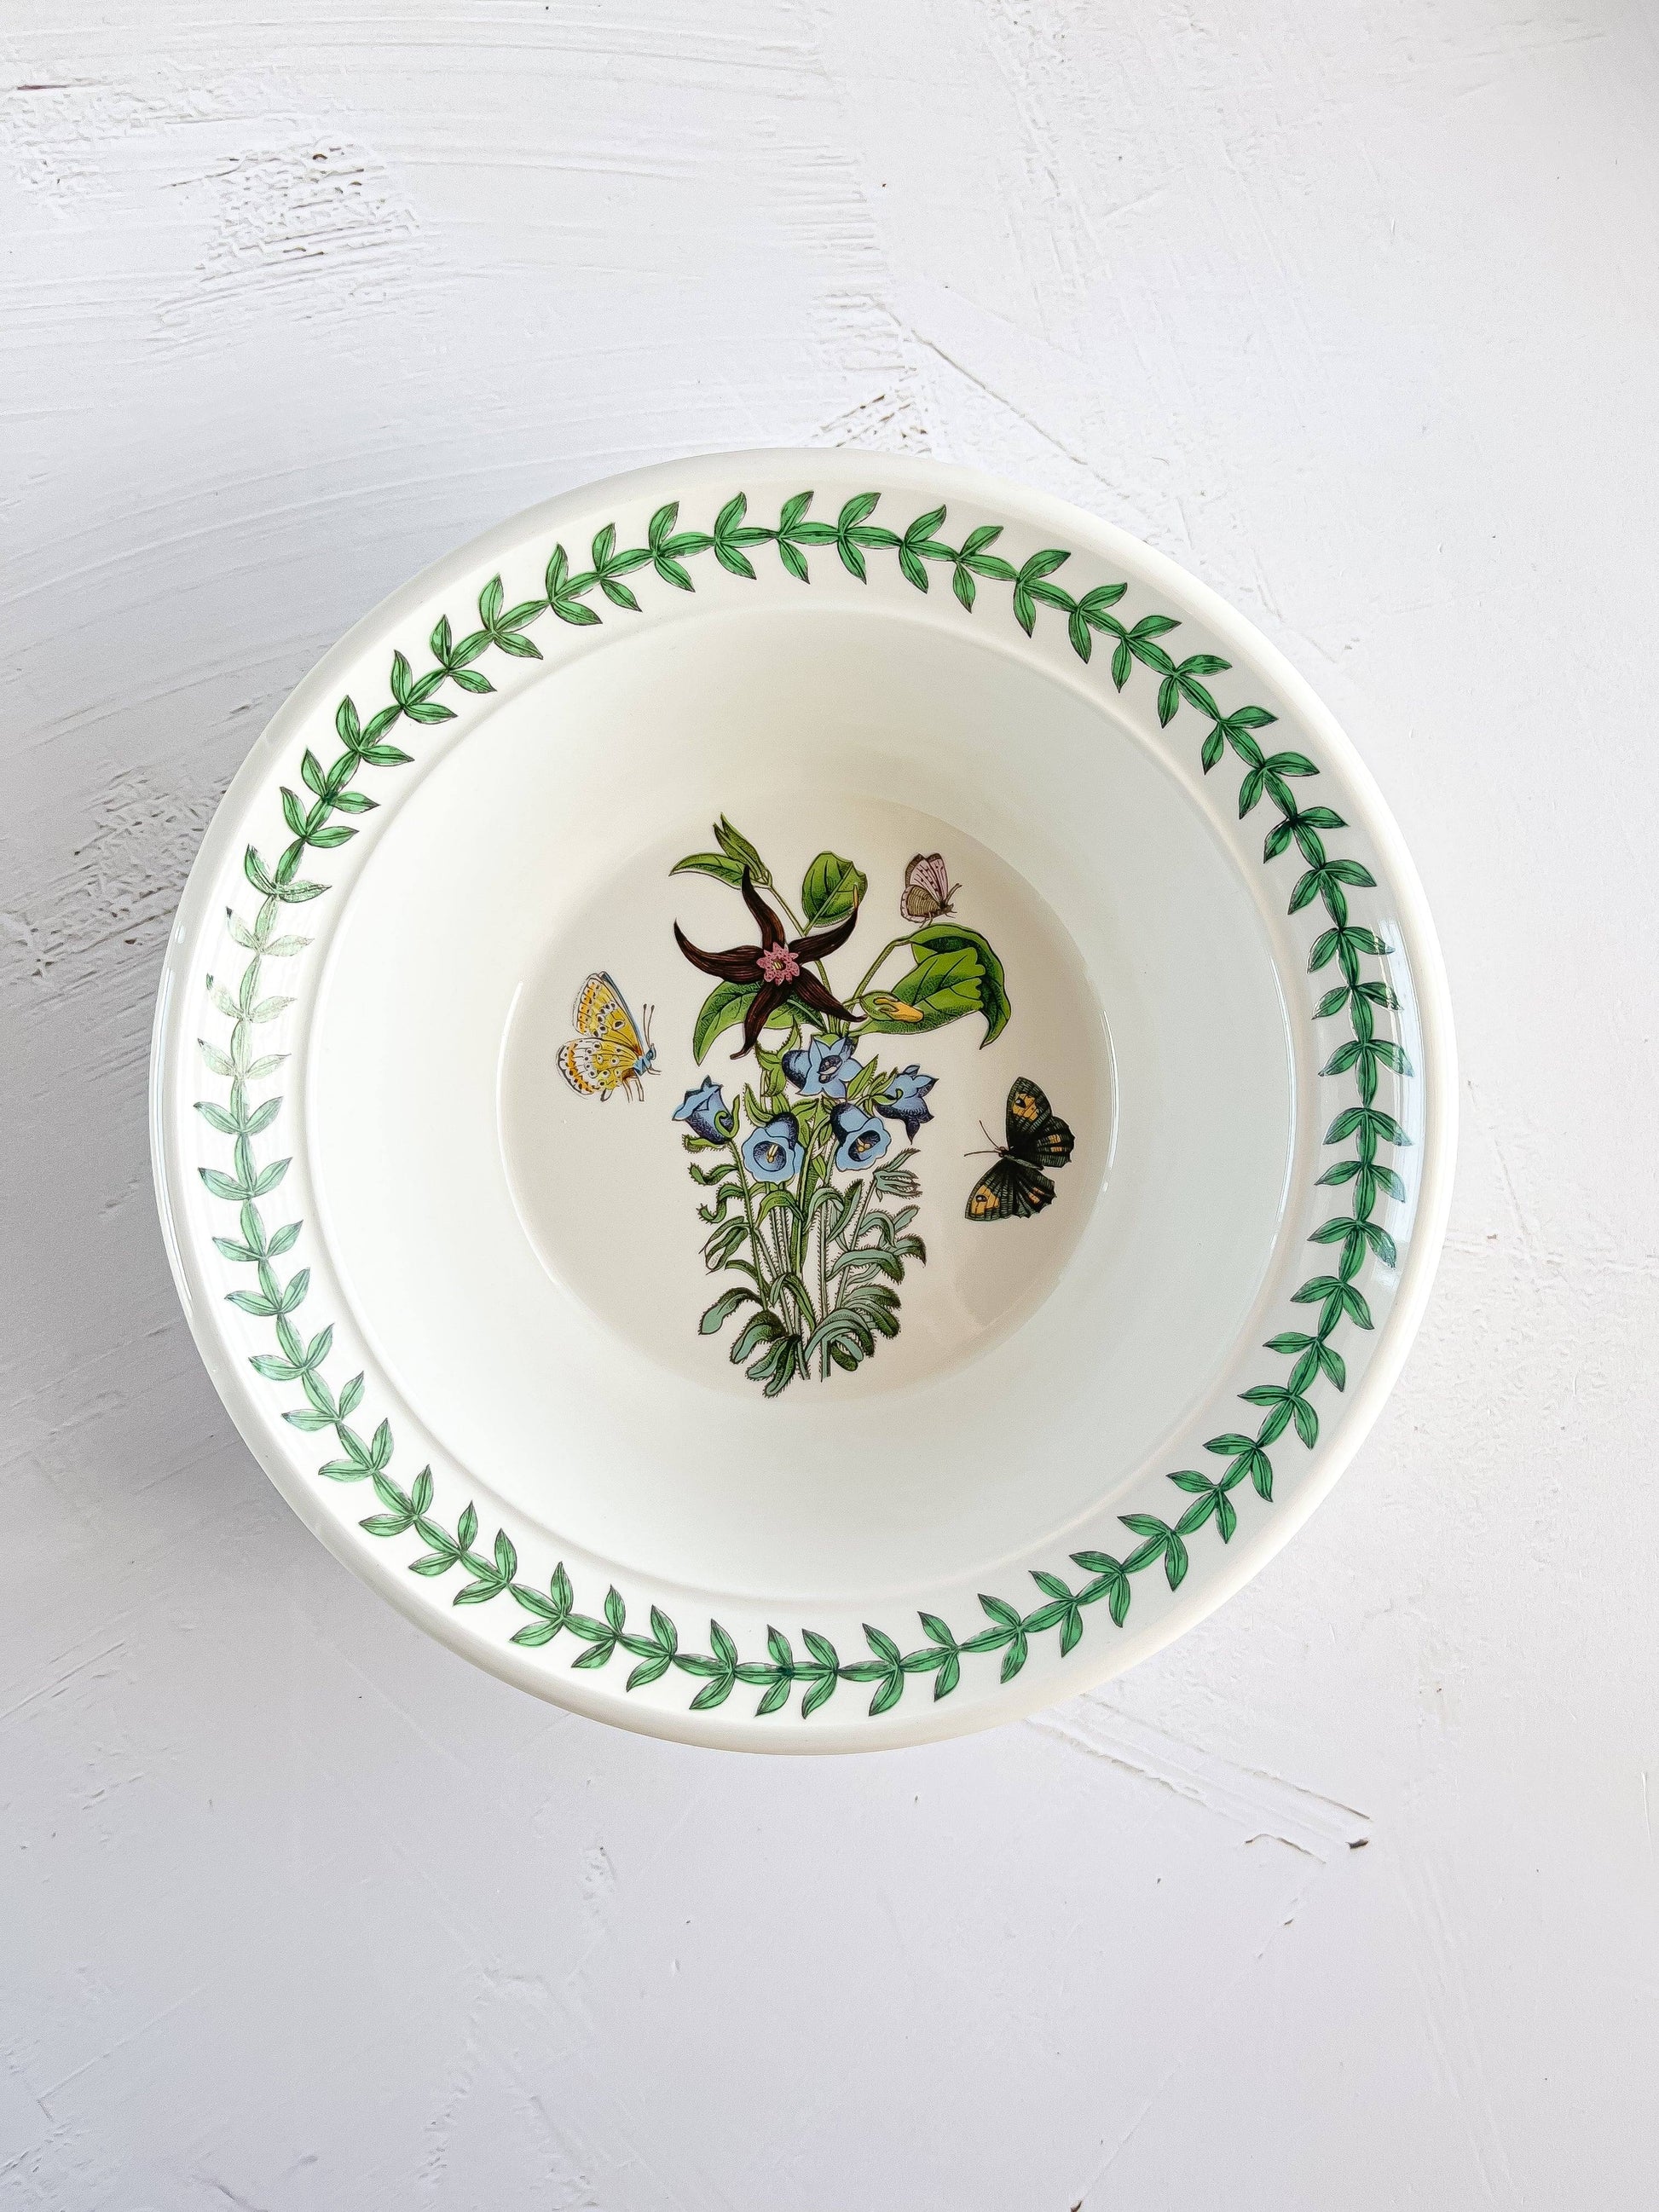 Portmeirion Botanic Garden Cereal Bowls - ‘Cotton Flower’ & 'Canterbury Bells' Designs - SOSC Home